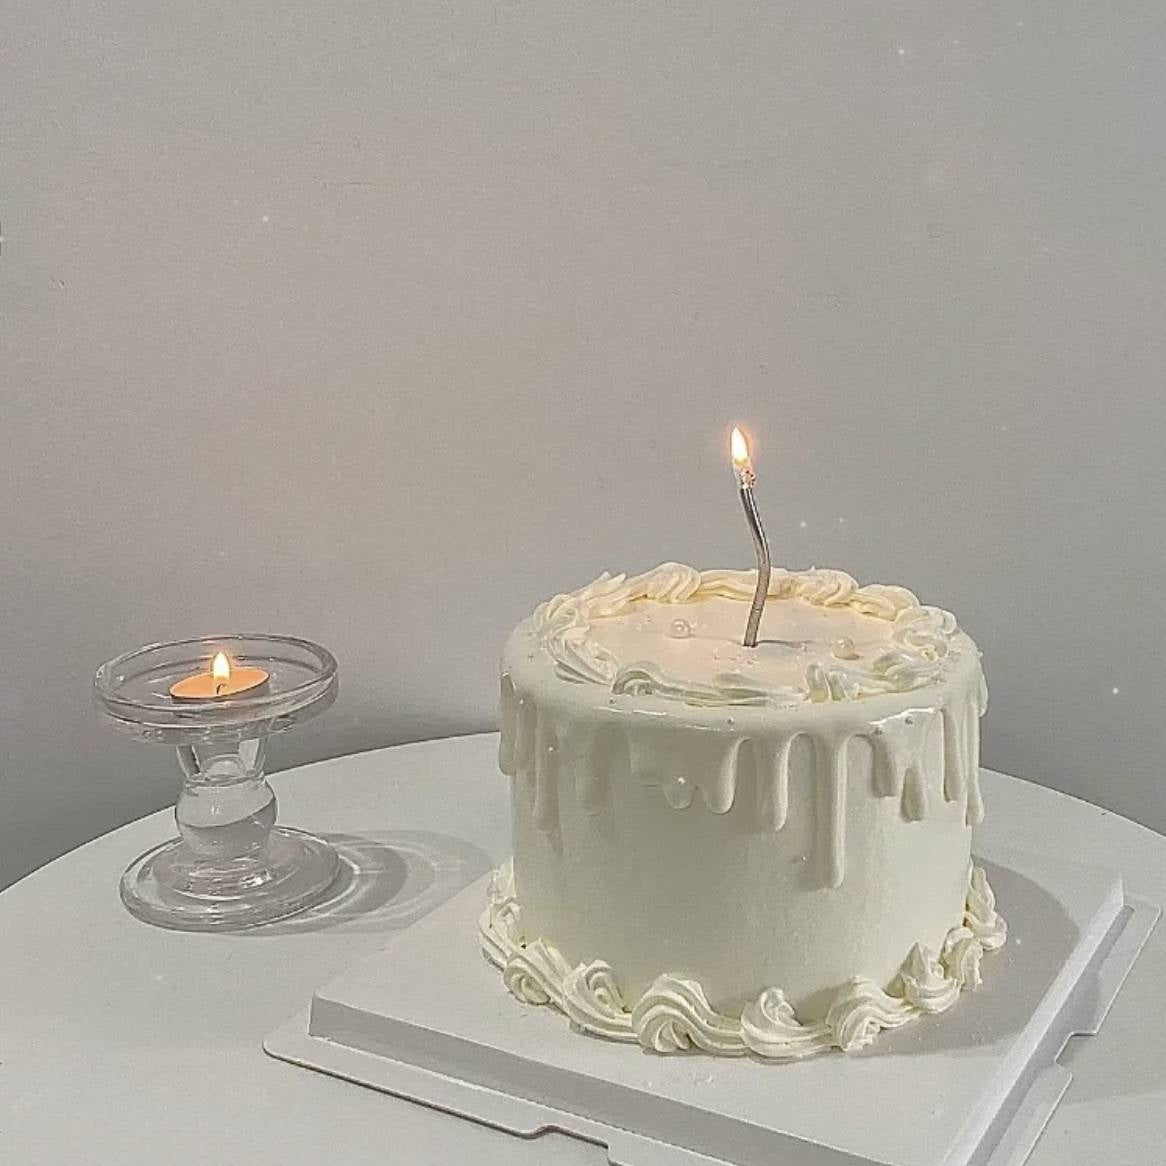 Simple Minimalist White Drips Cake